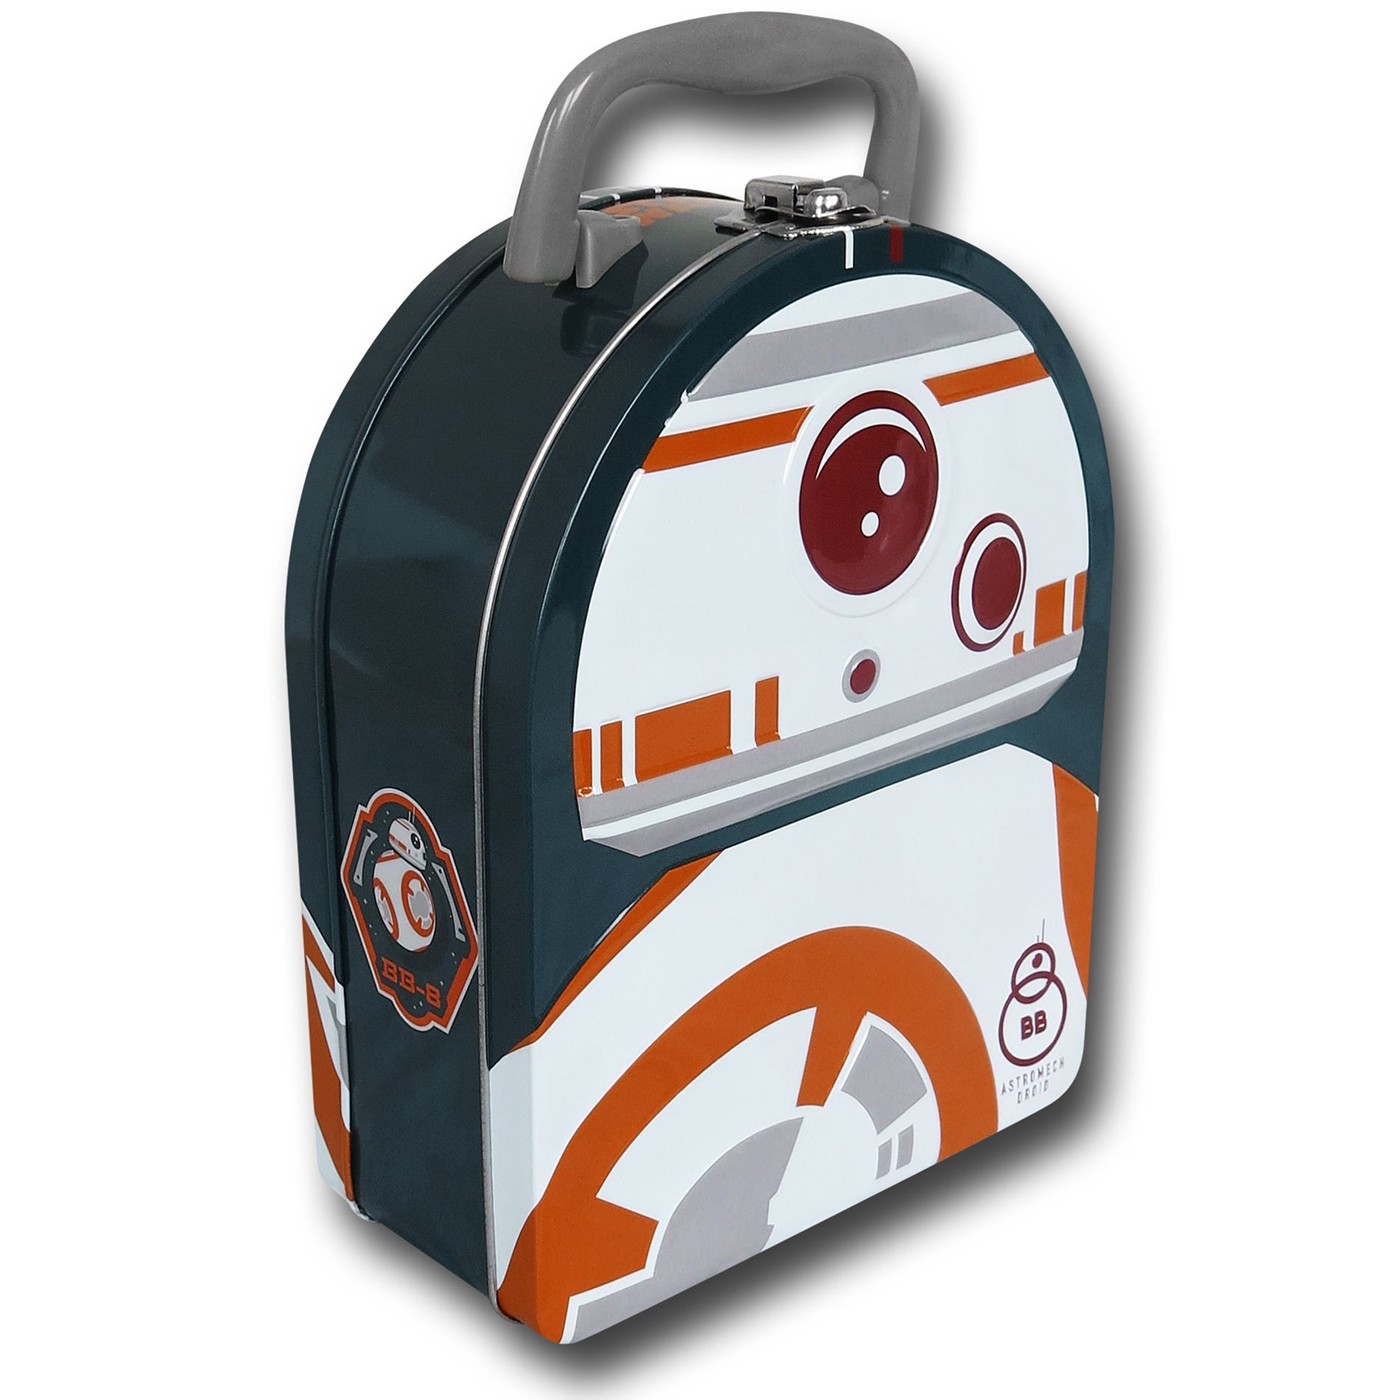 Star Wars Force Awakens BB-8 Lunchbox